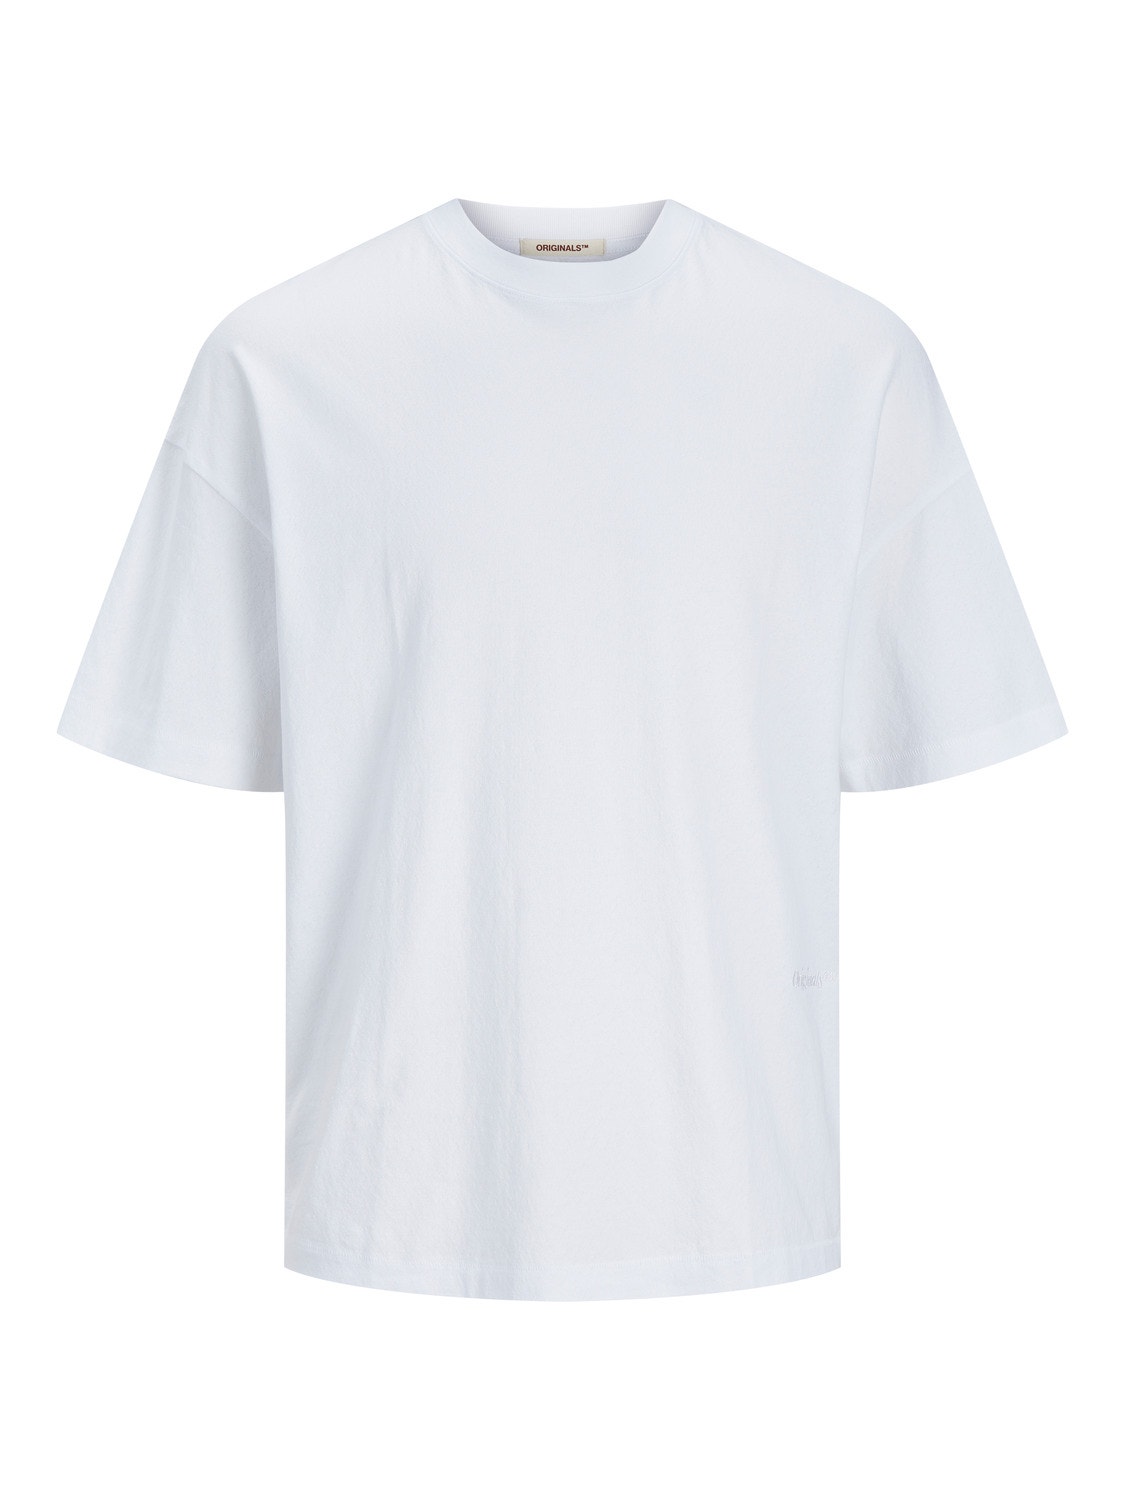 Jack & Jones Printed Crew Neck T-shirt -Bright White - 12256330